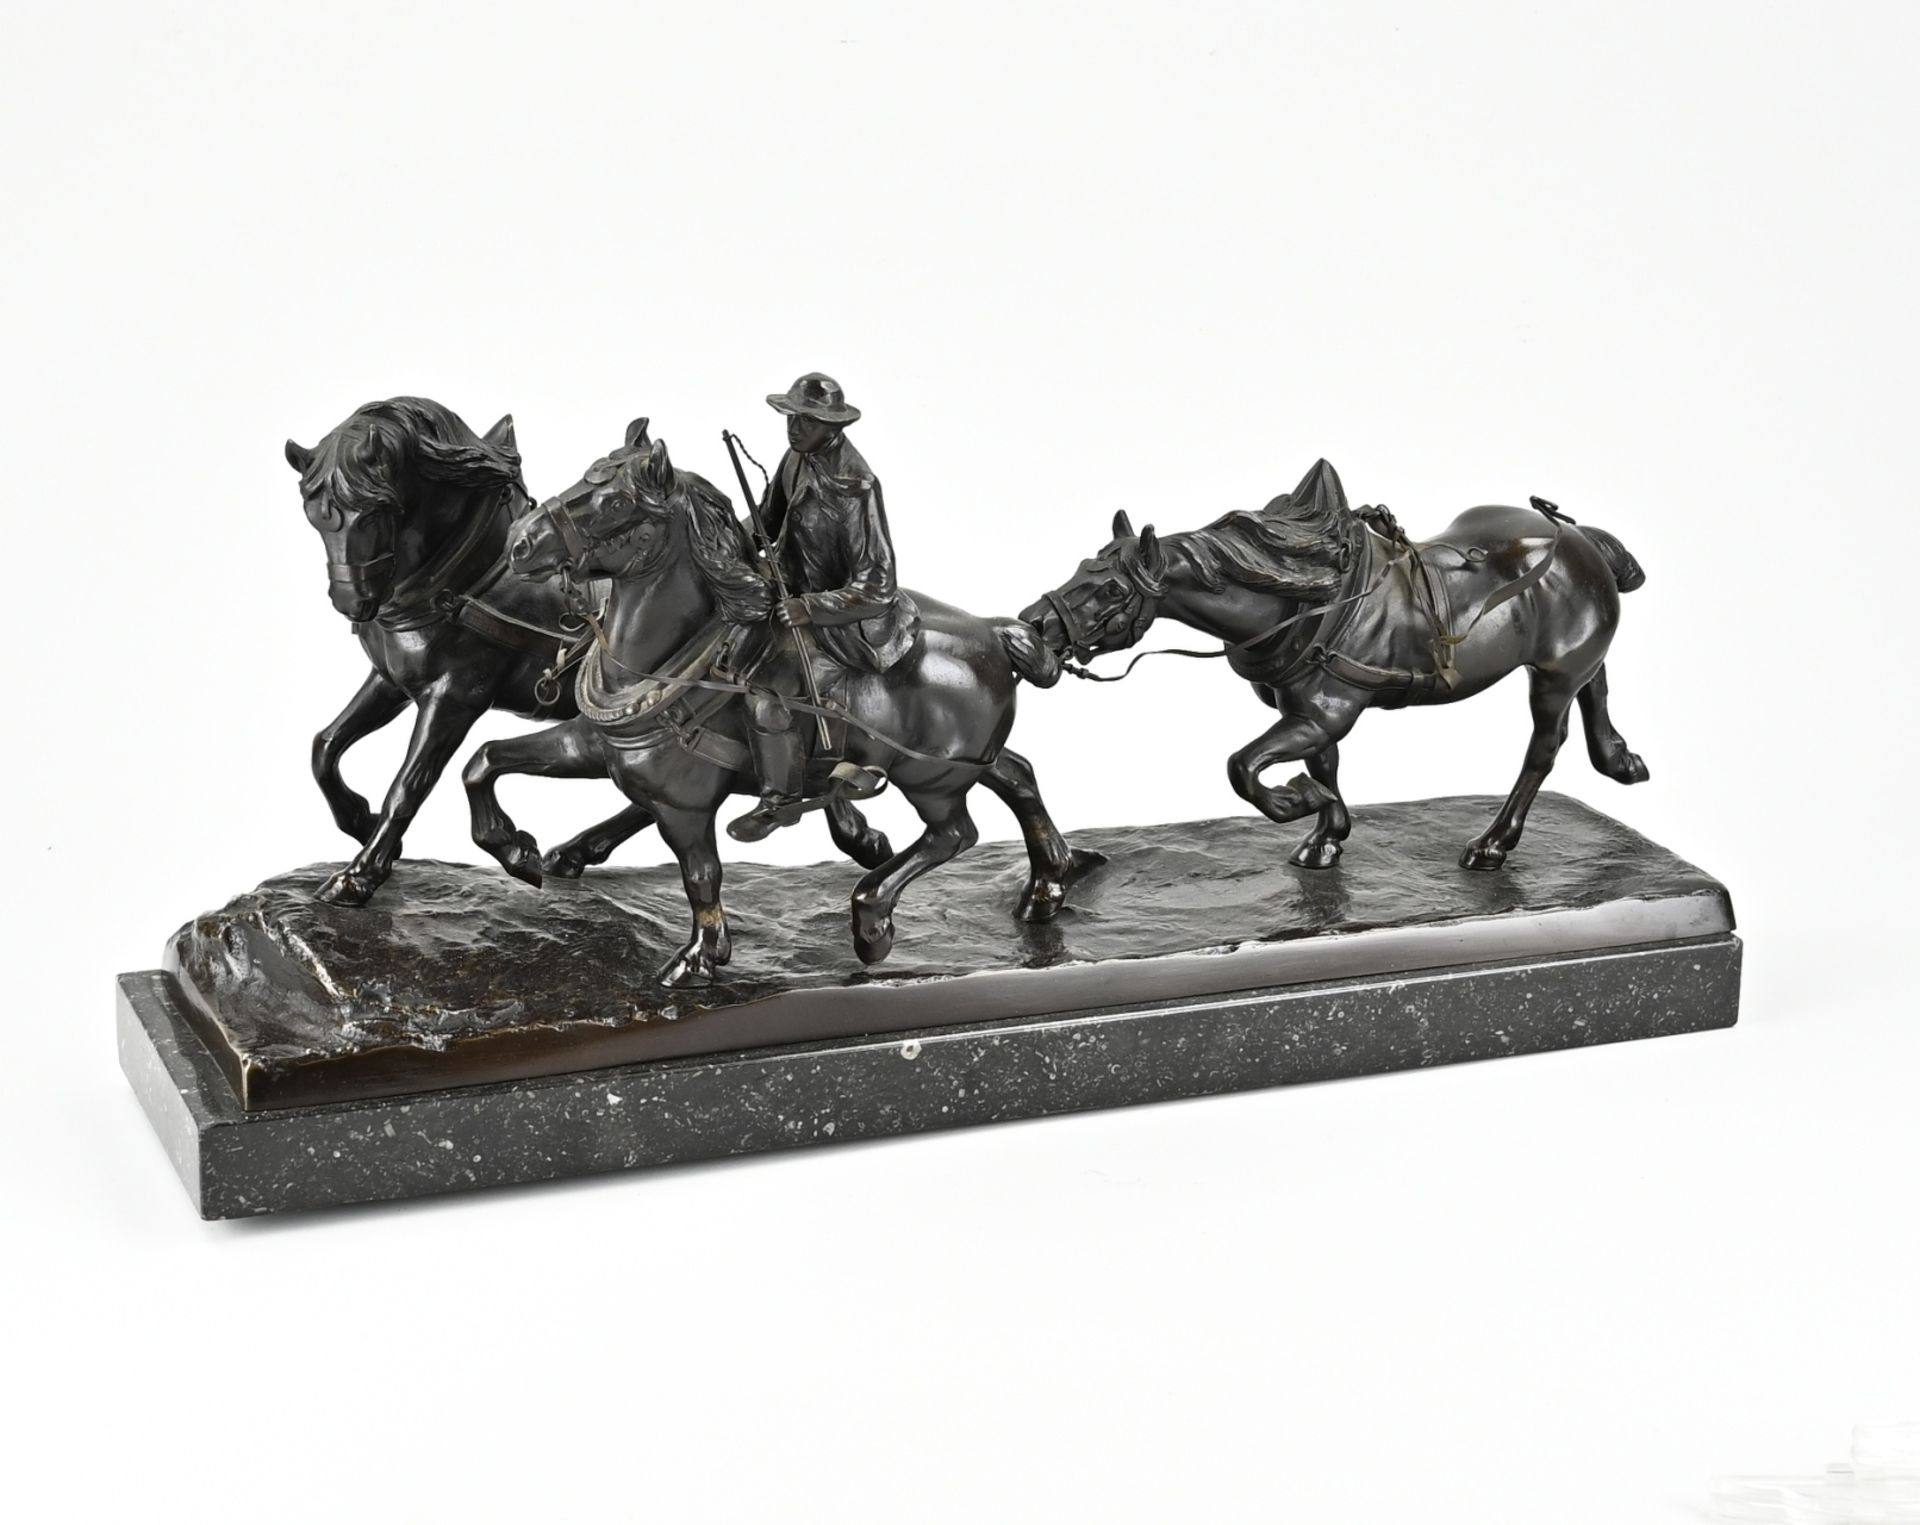 Antique bronze group of figures